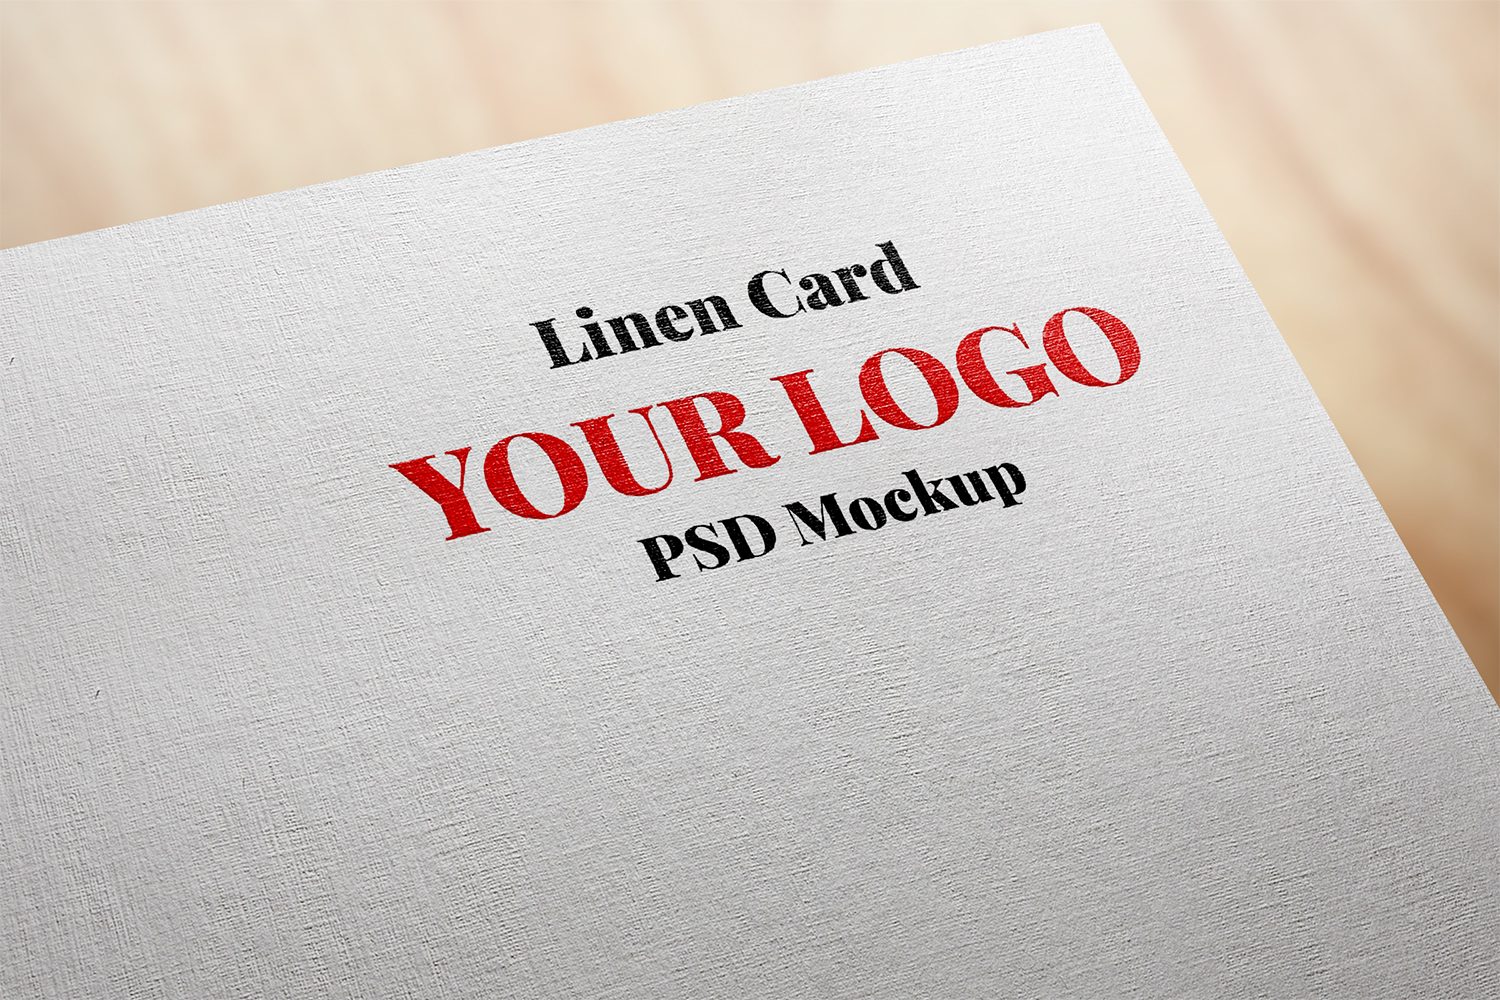 Linen Effect Card Logo Mockup PSD